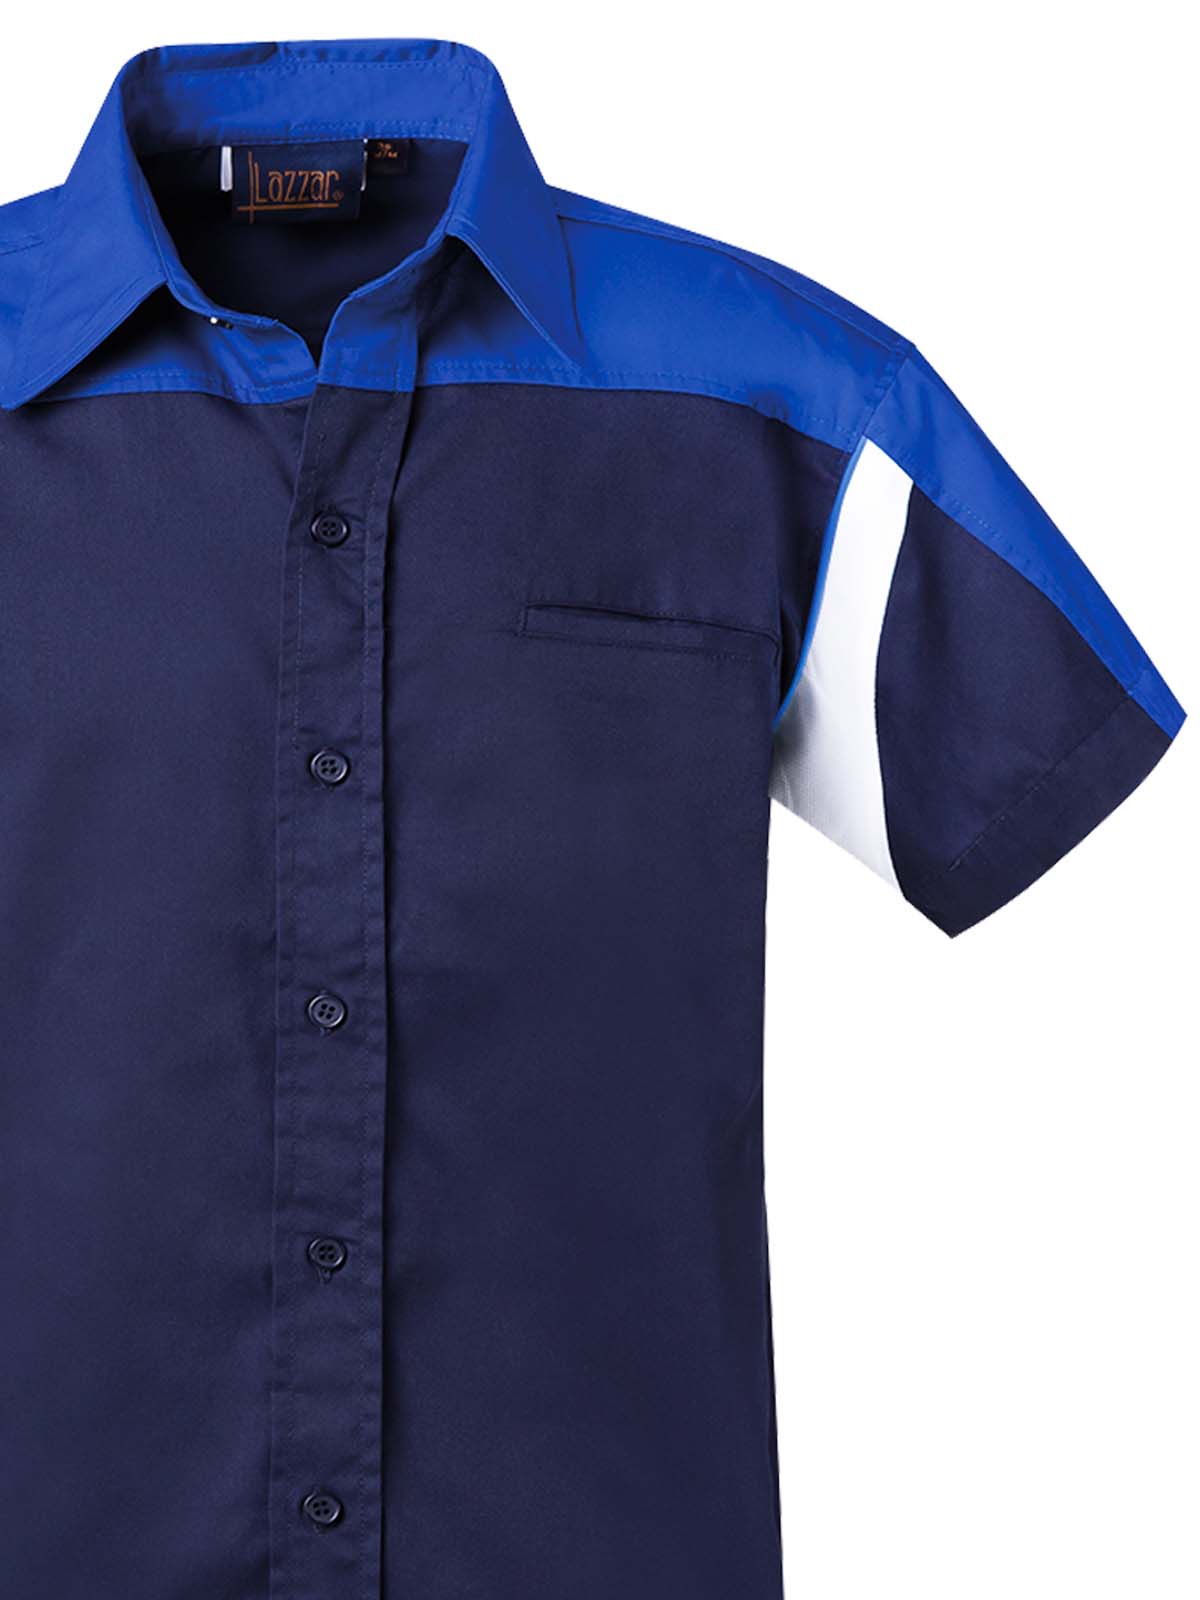 Racing Industrial Shirt Blue